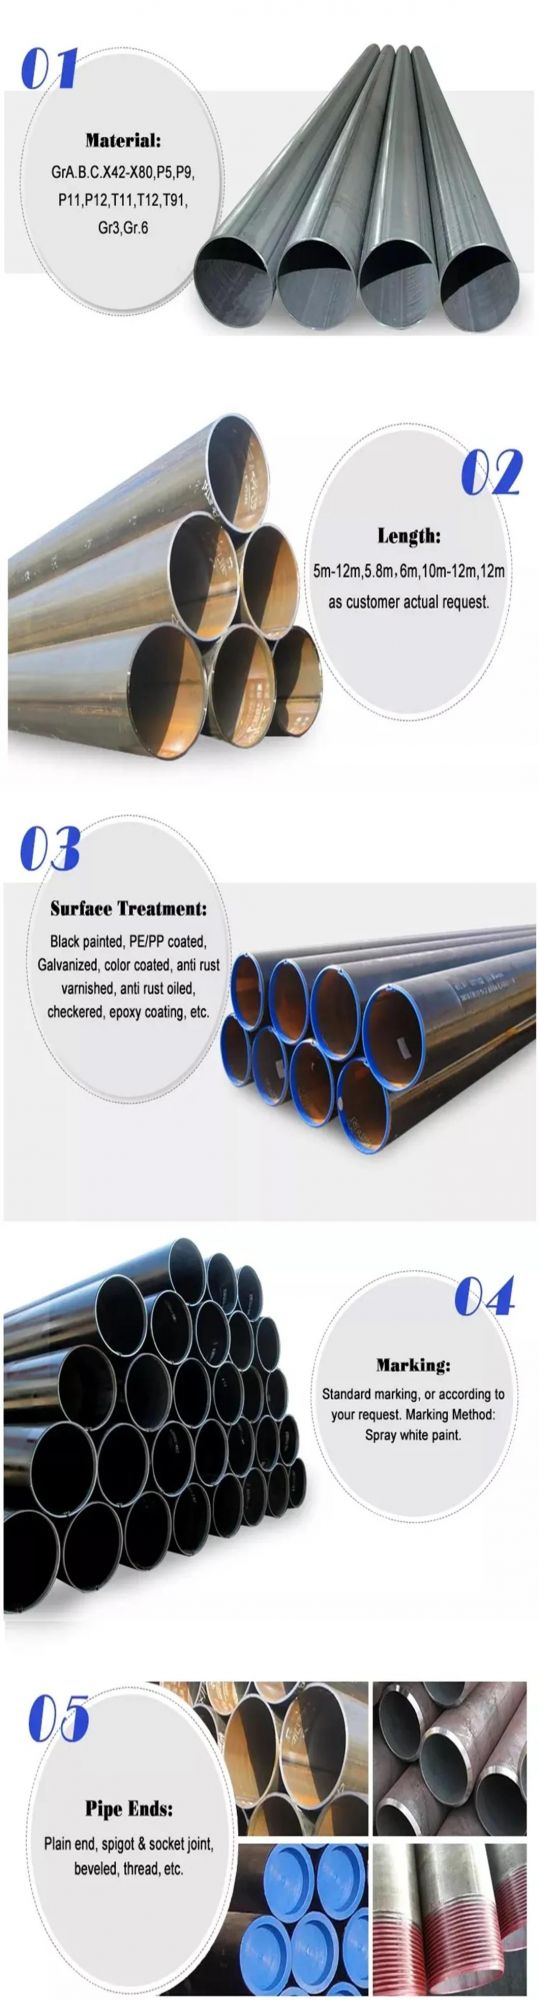 Offer ASTM A519 JIS3445 En10 Standard Seamless Carbon Steel Pipe and 1010 1020 1040 Seamless Steel Tube